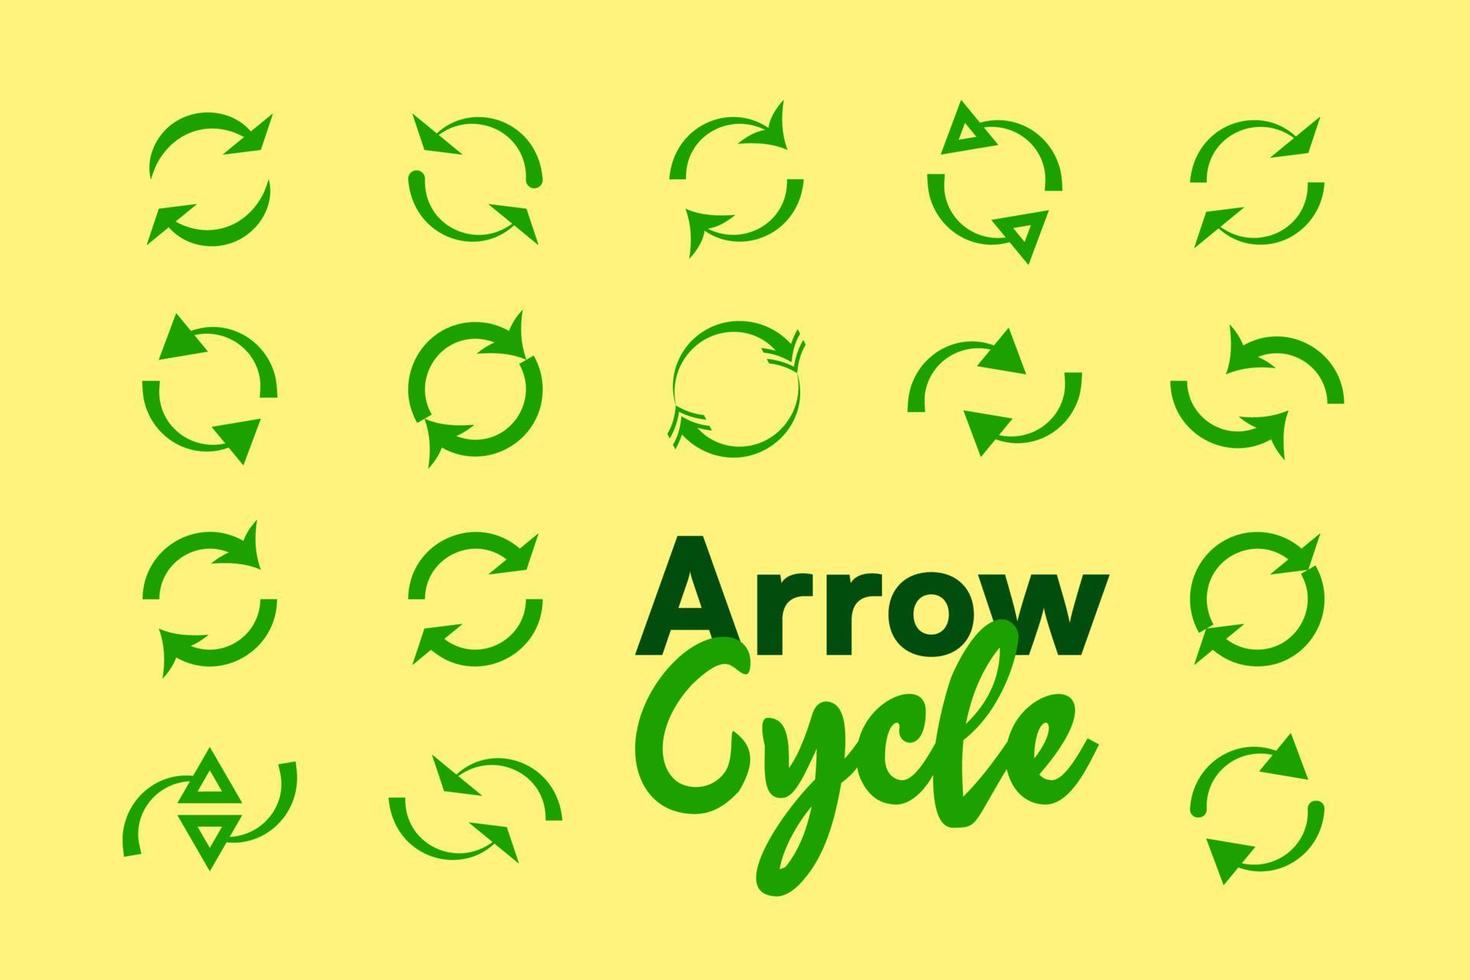 Arrow cycle symbols for green, eco friendly world. vector